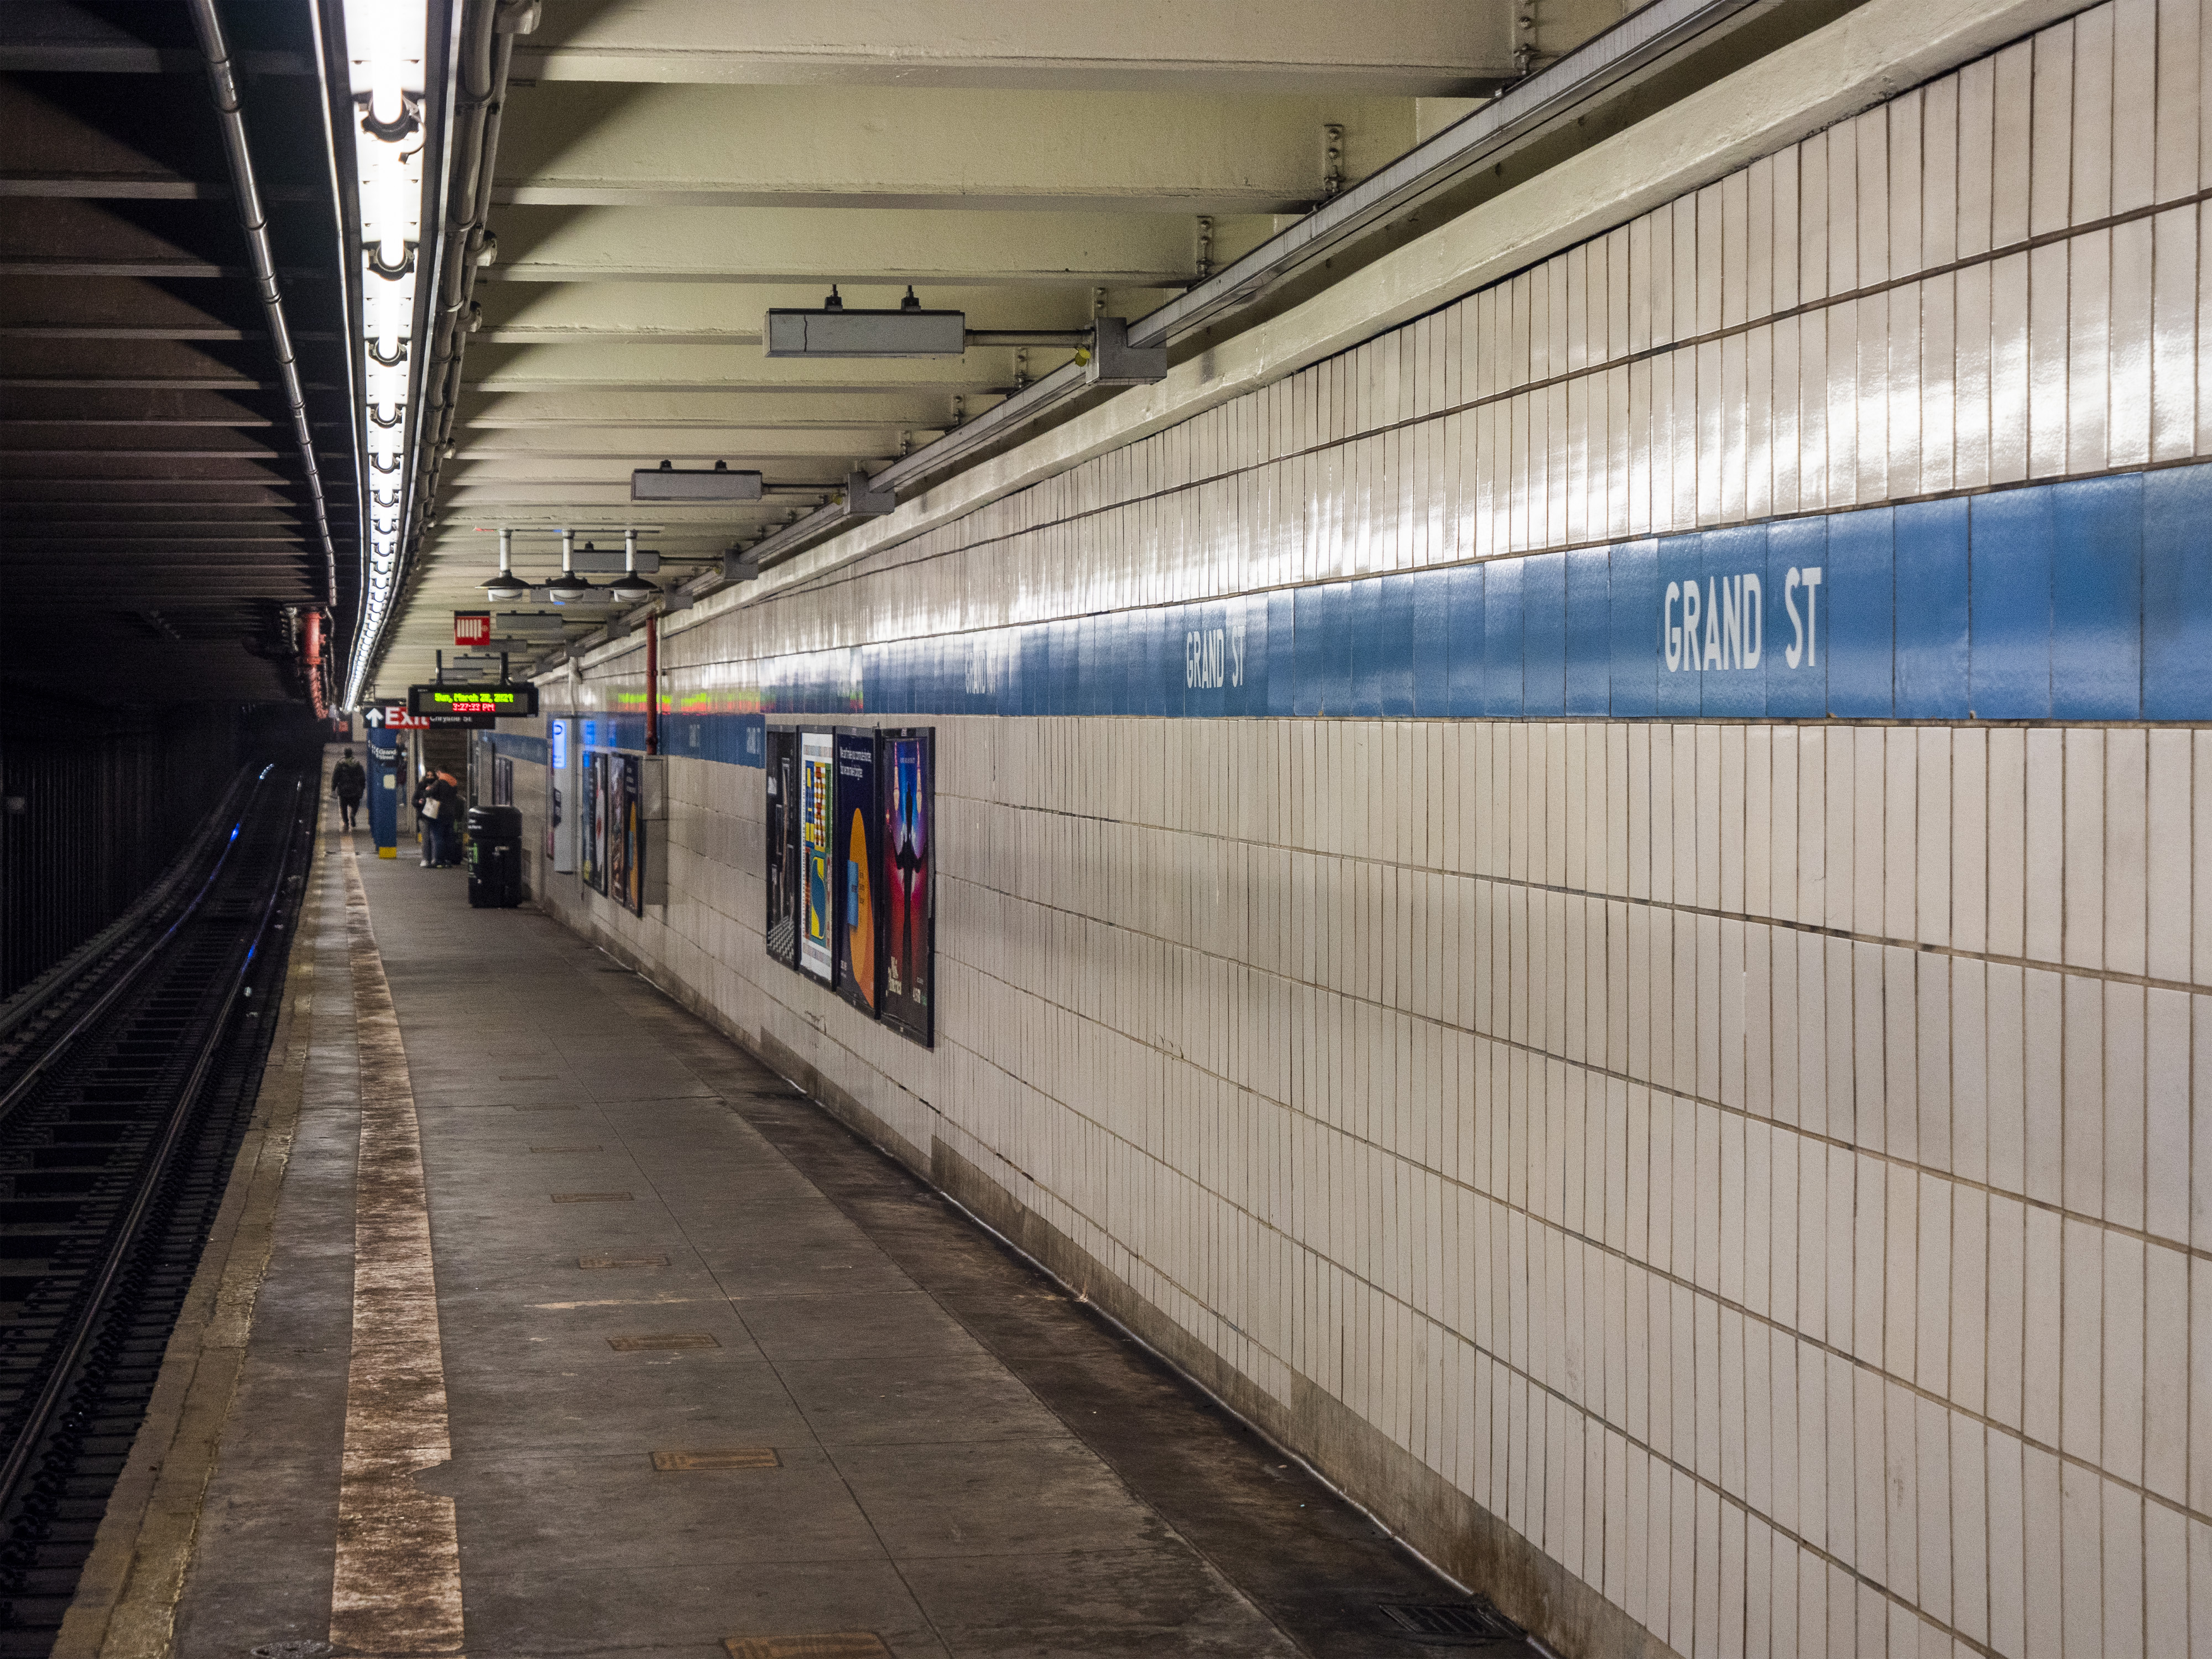 161st Street station (IRT Third Avenue Line) - Wikipedia